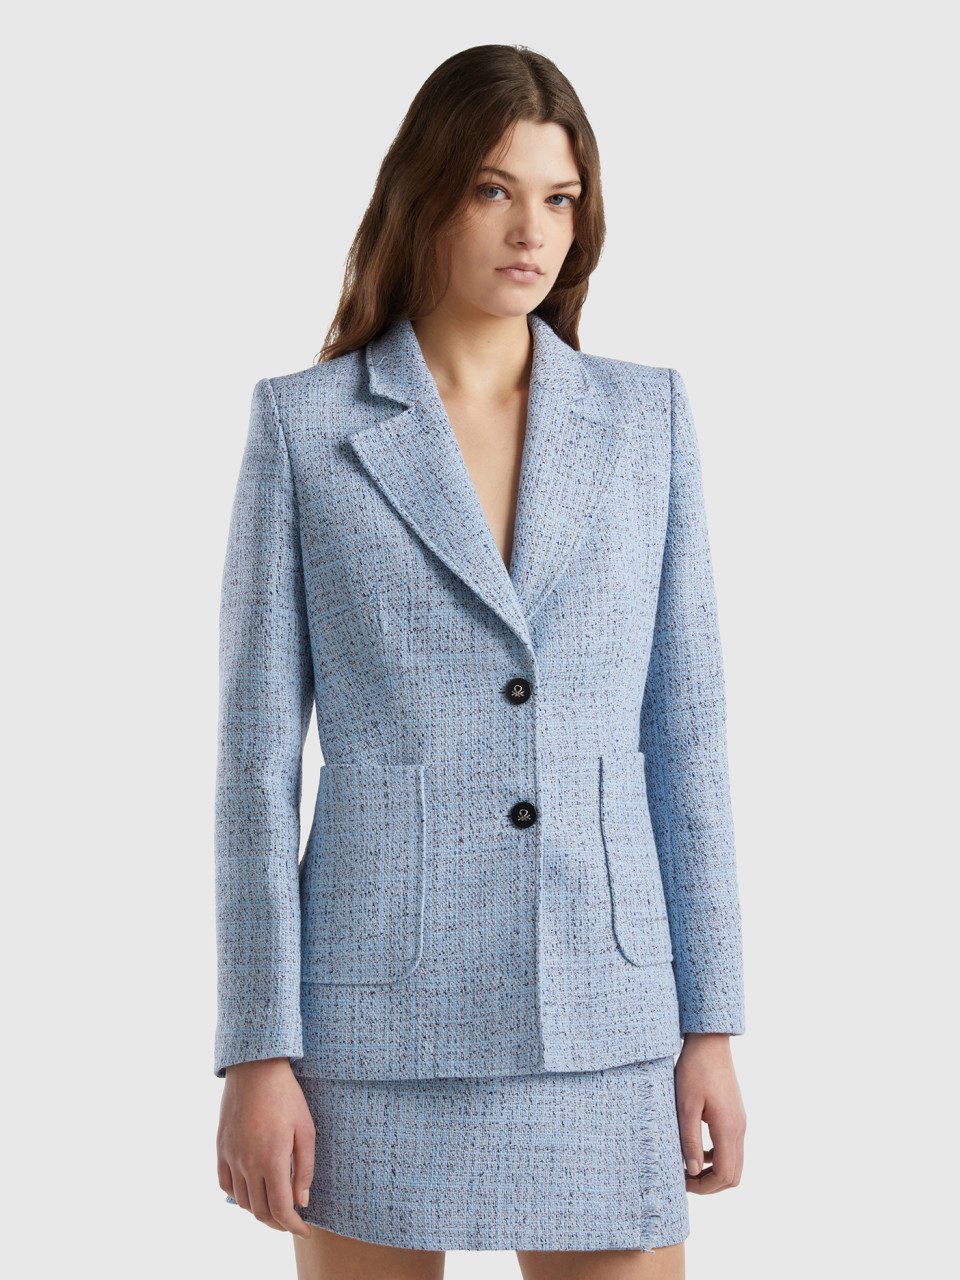 Benetton, Fitted Tweed Blazer, Light Blue, Women